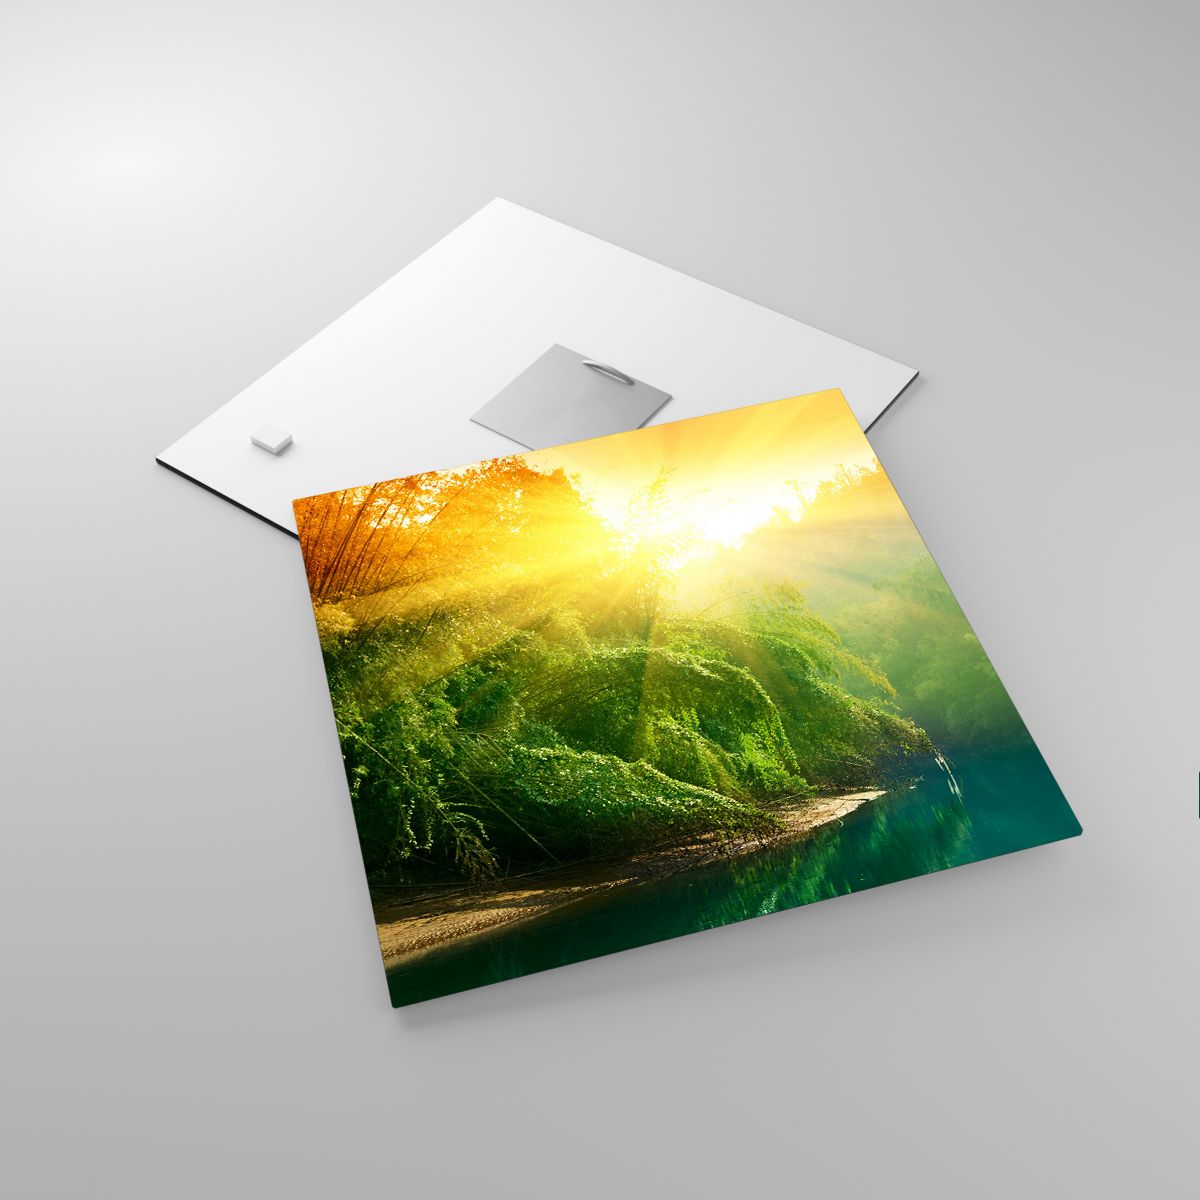 Glasbild Tropen, Glasbild Landschaft, Glasbild Sonne, Glasbild Landschaft, Glasbild Natur